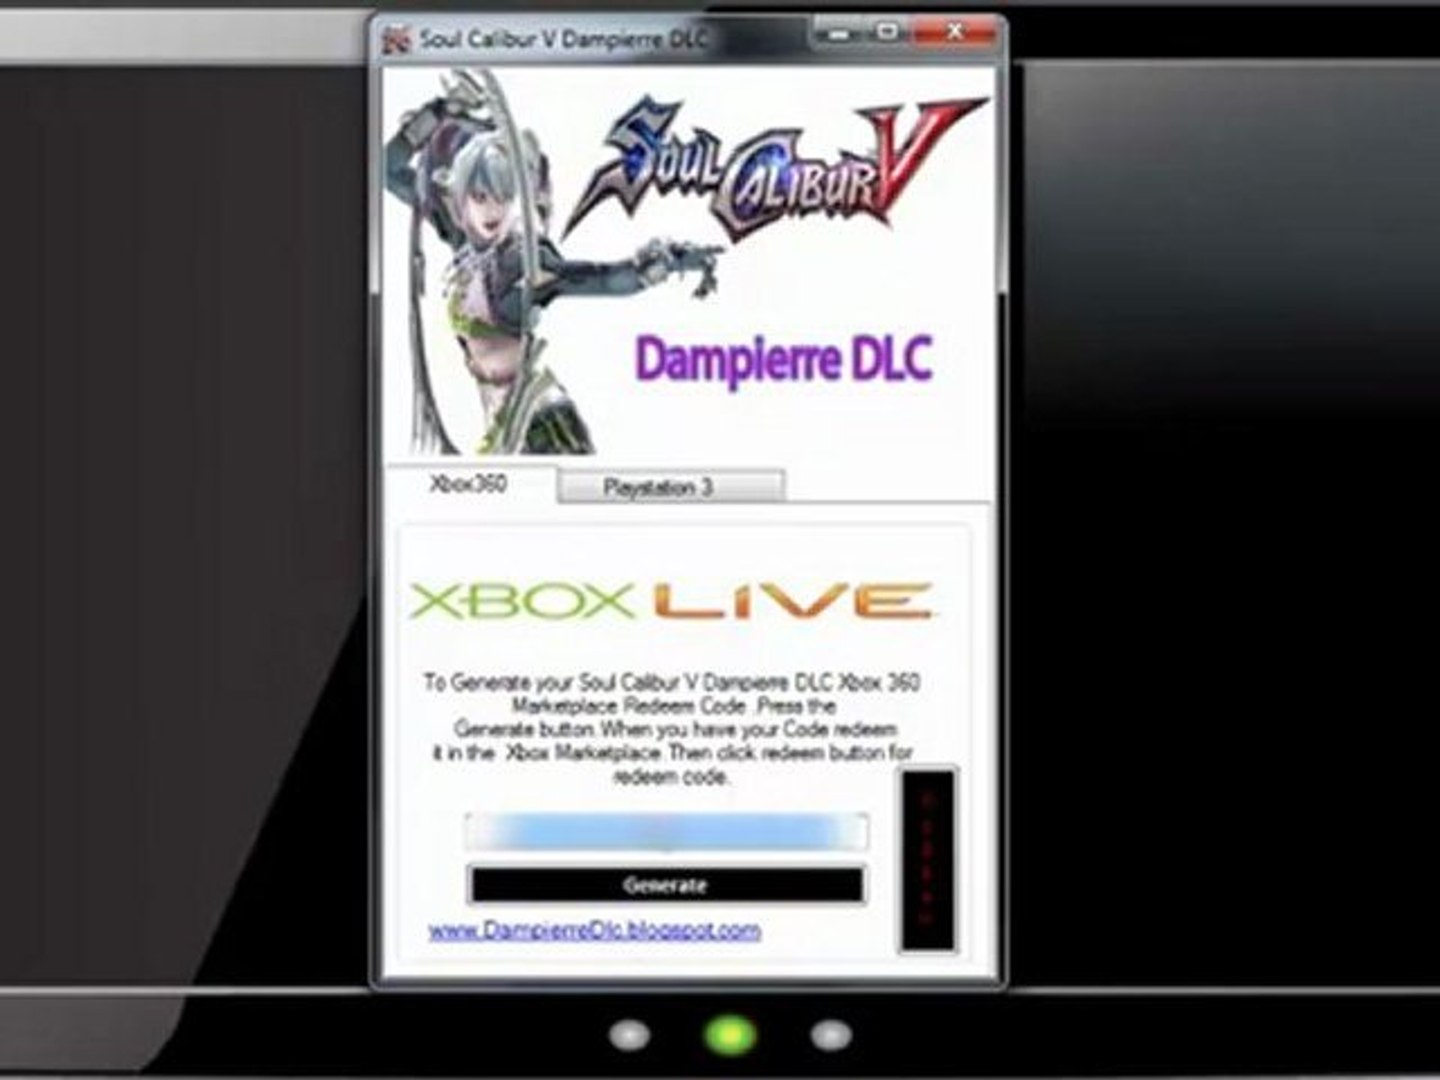 Soul Calibur V Dampierre DLC Redeem Codes Free!! - video Dailymotion